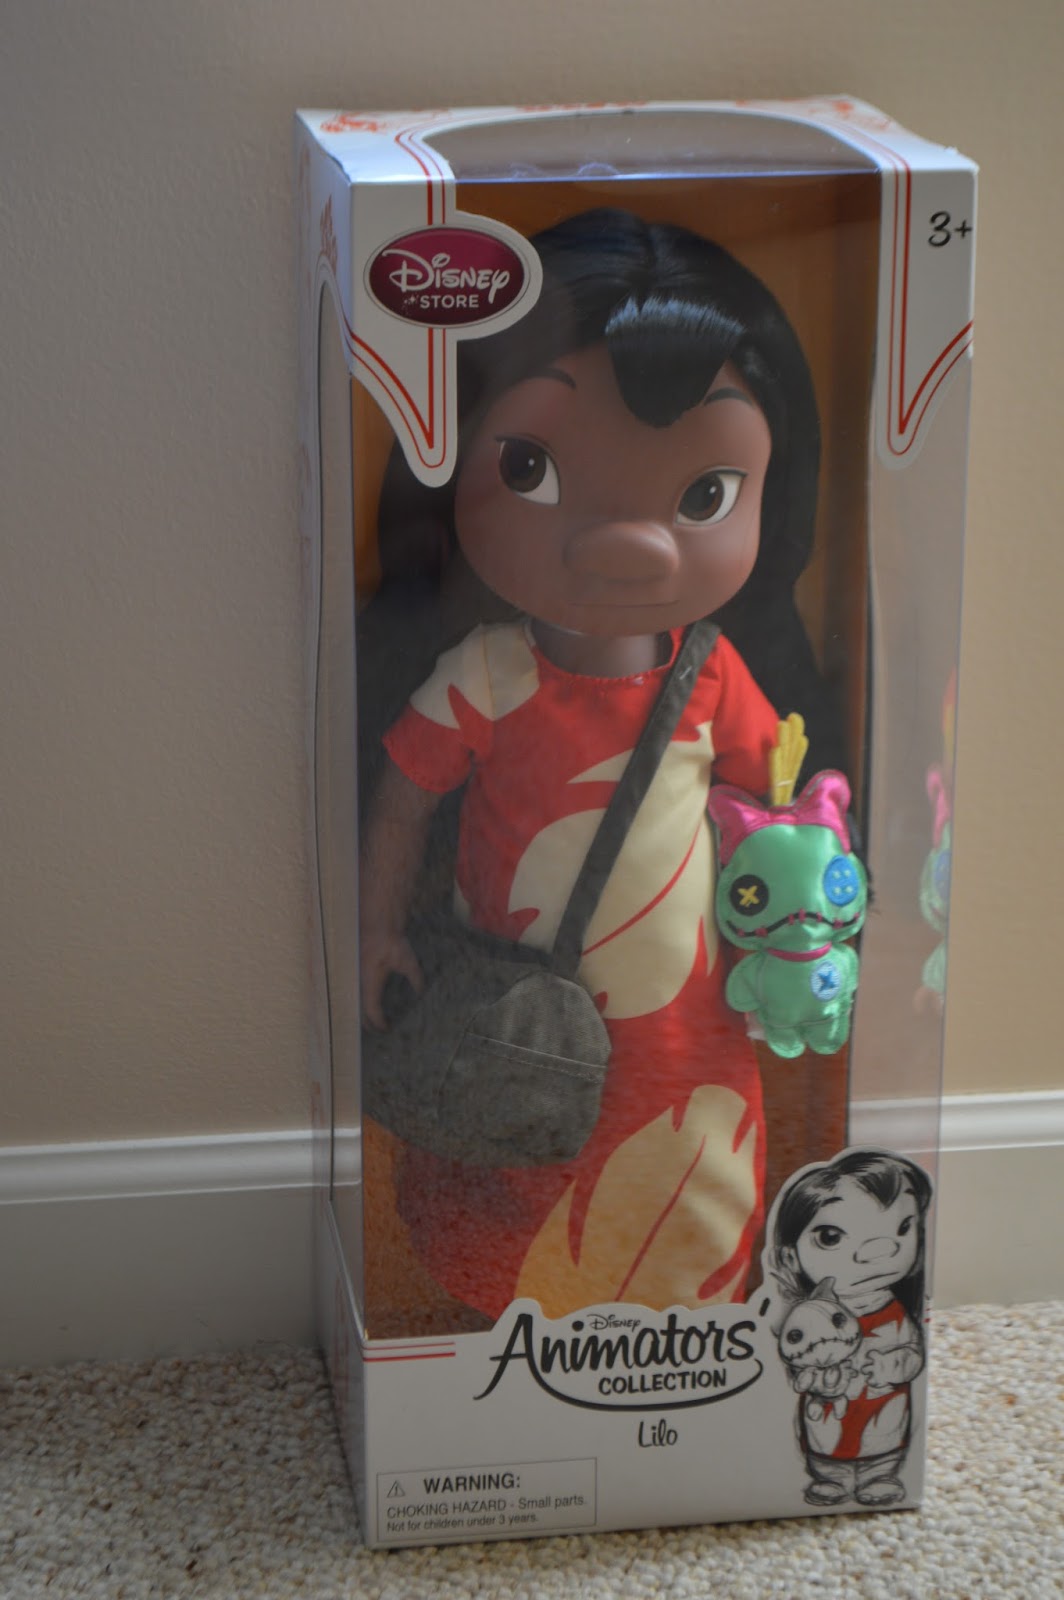 Disney Store Animator's Collection Lilo & Stitch Mini Doll Playset